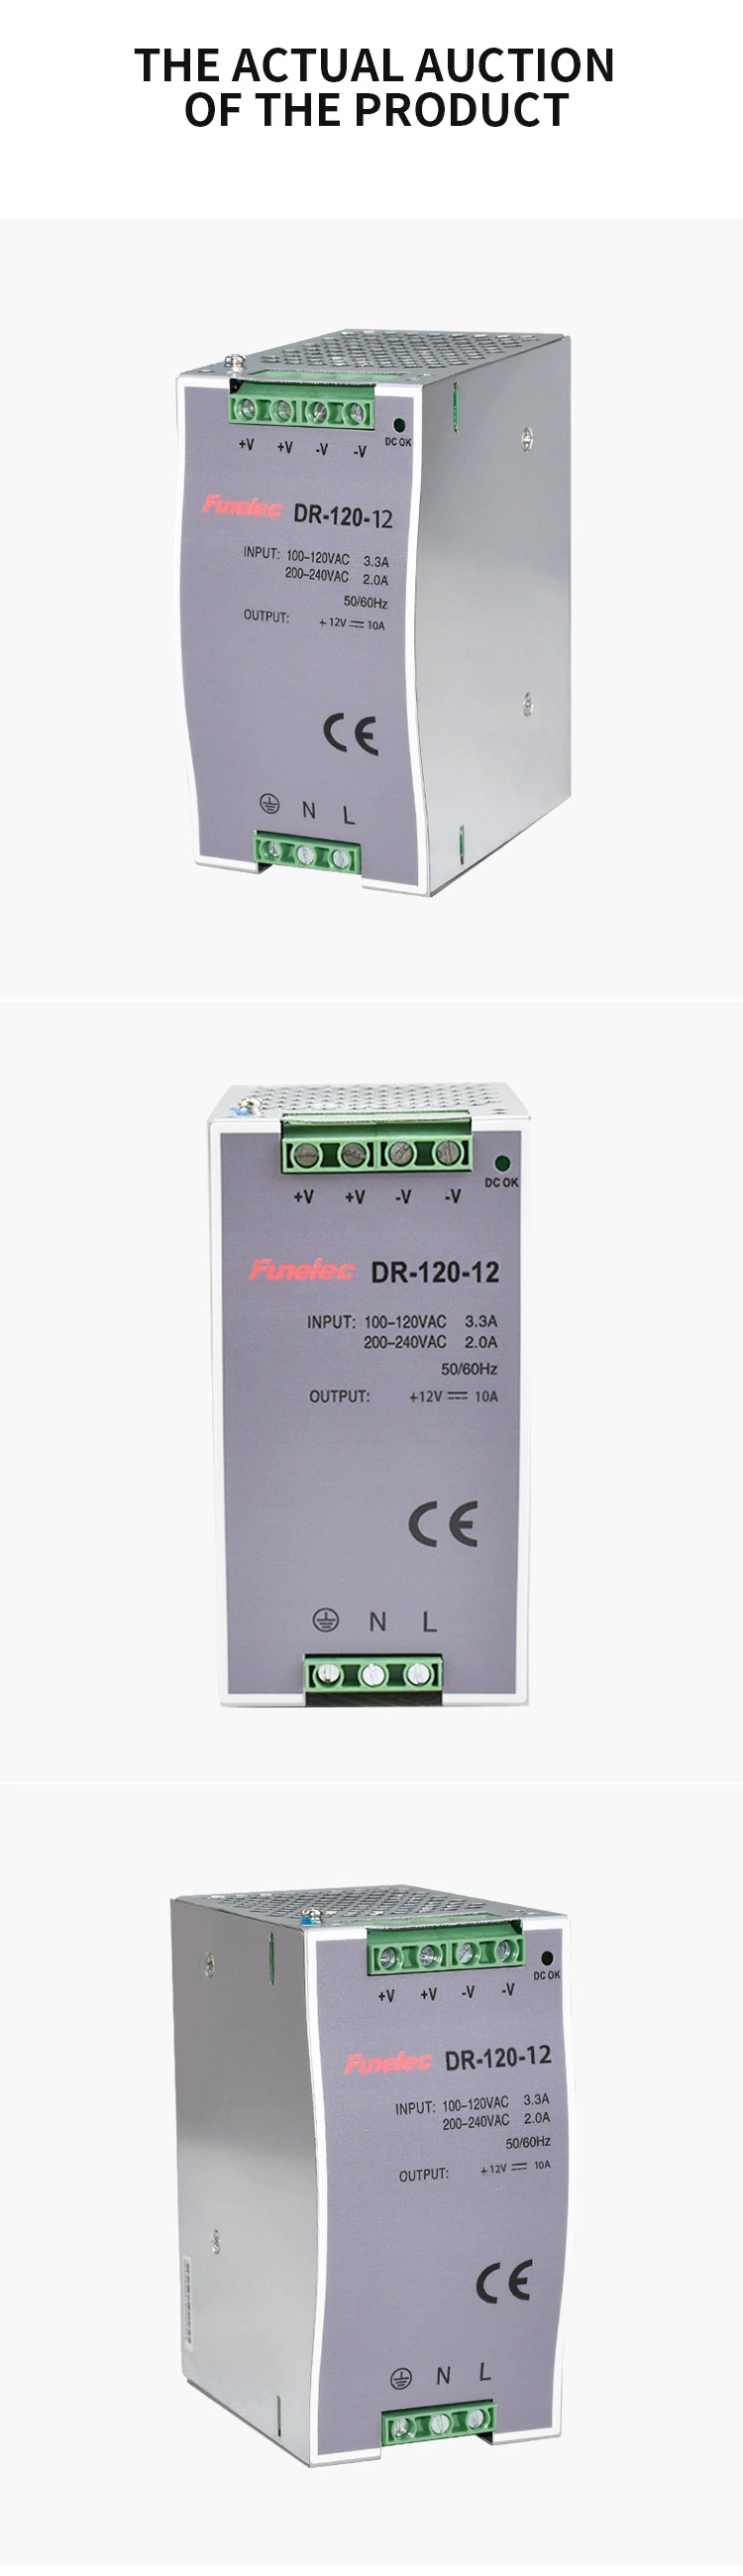 120W Rail Switching Power Supply Dr-120-12V 10A Rail Power Supply Card Rail Installation